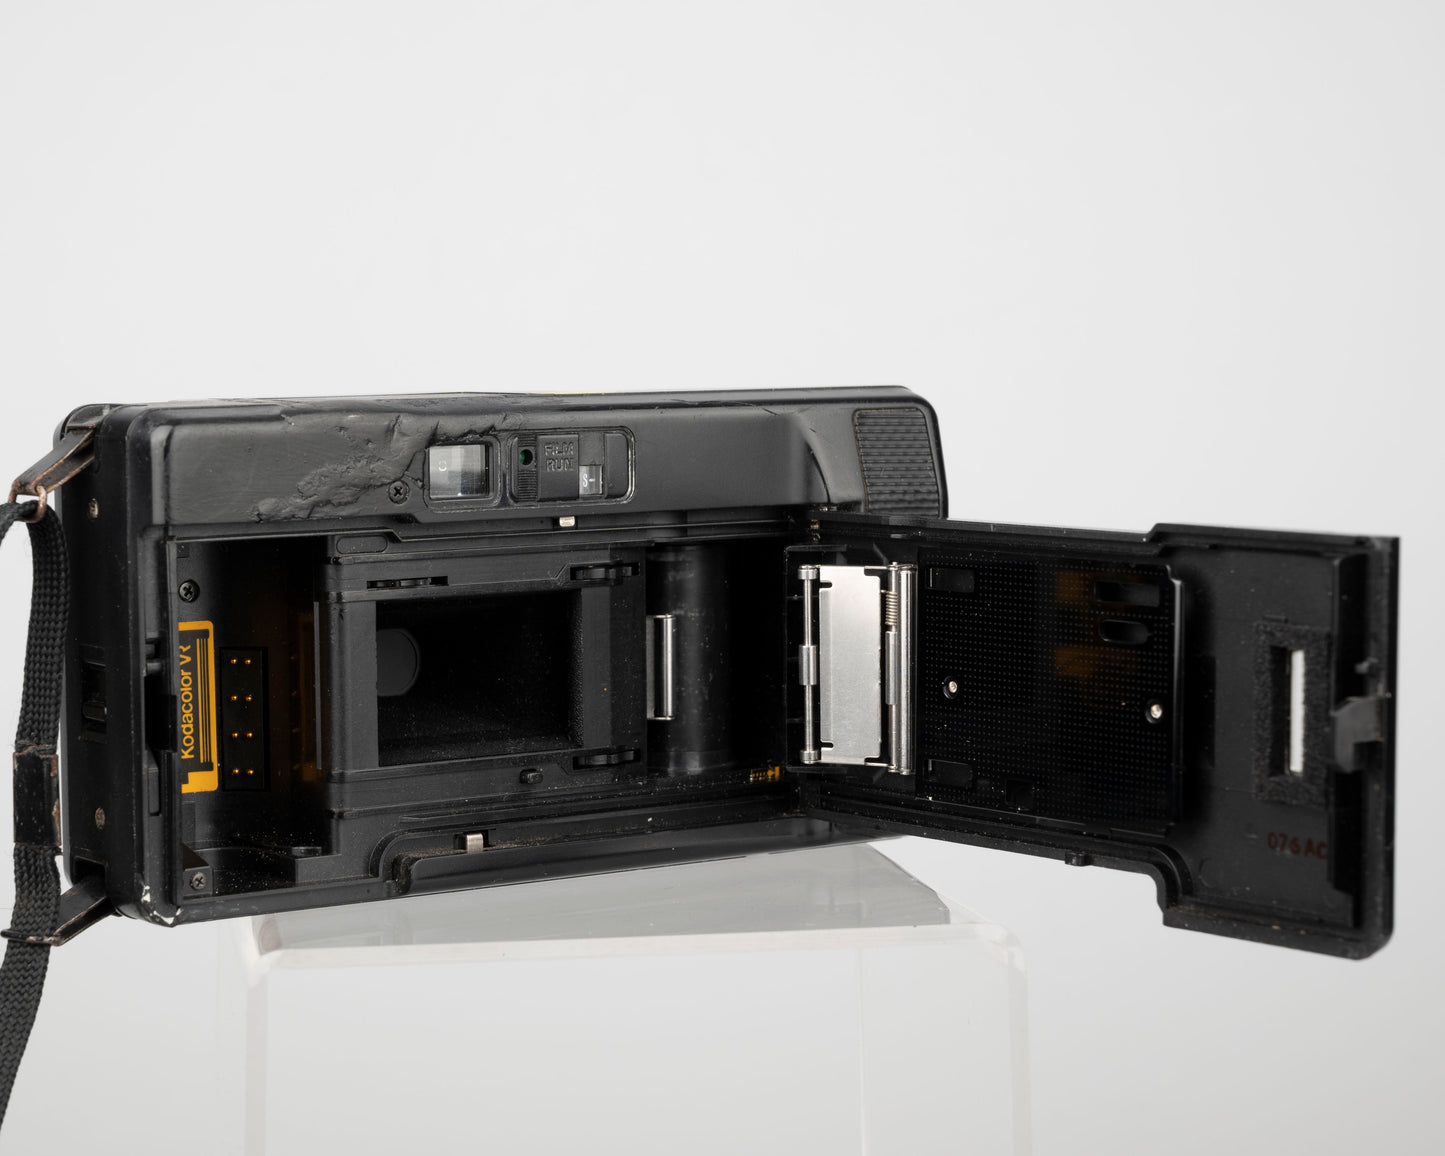 Kodak VR35 K12 autofocus 35mm film camera